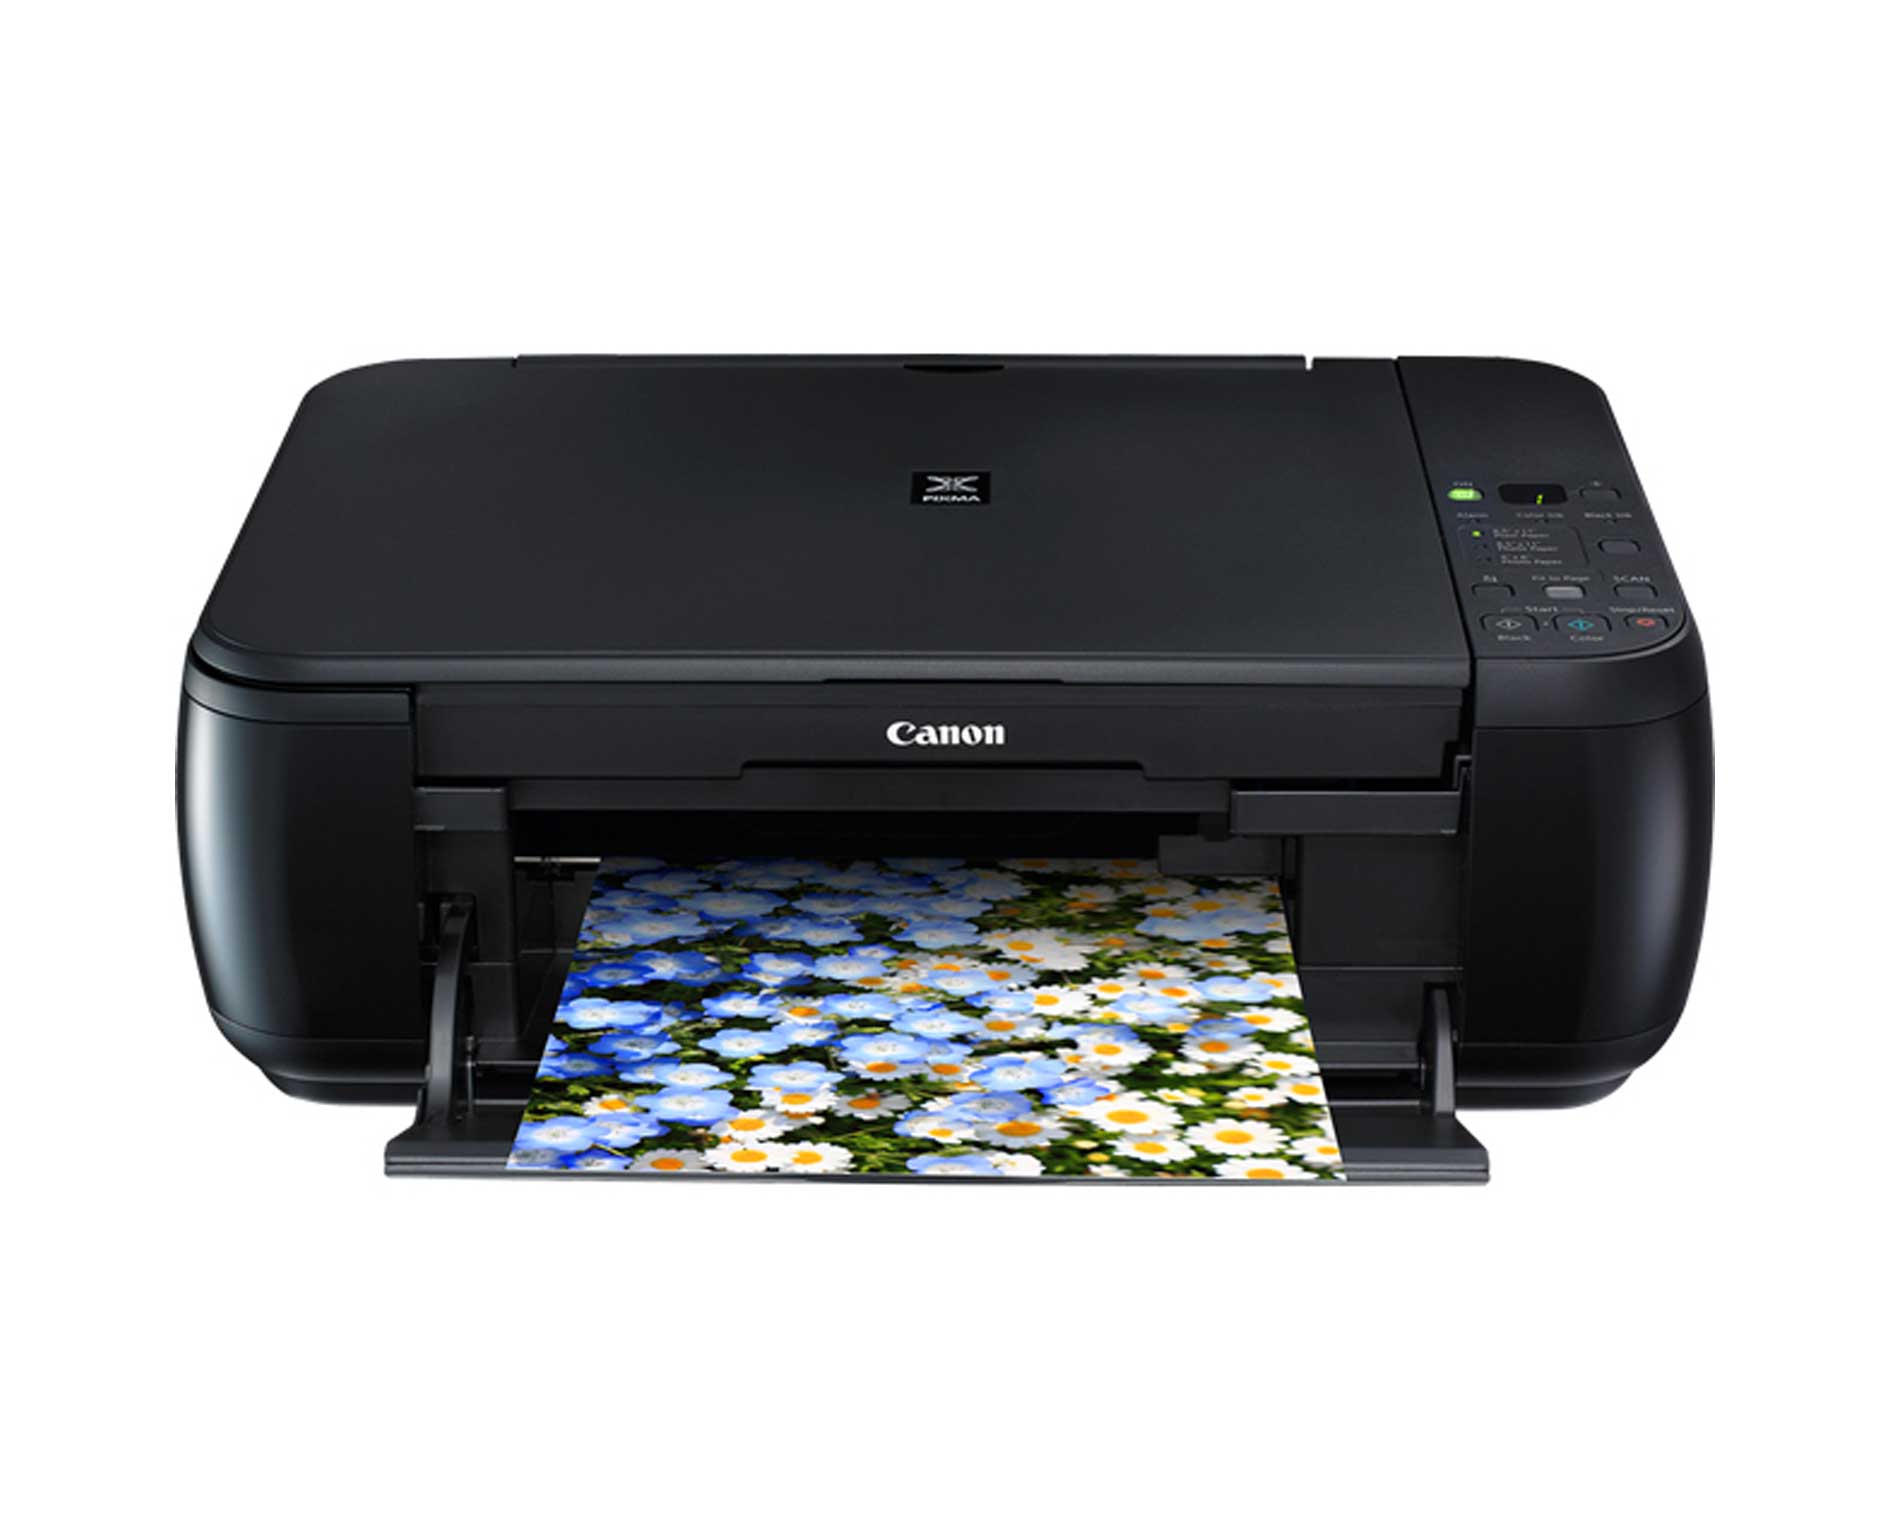 Inkjet photo printer